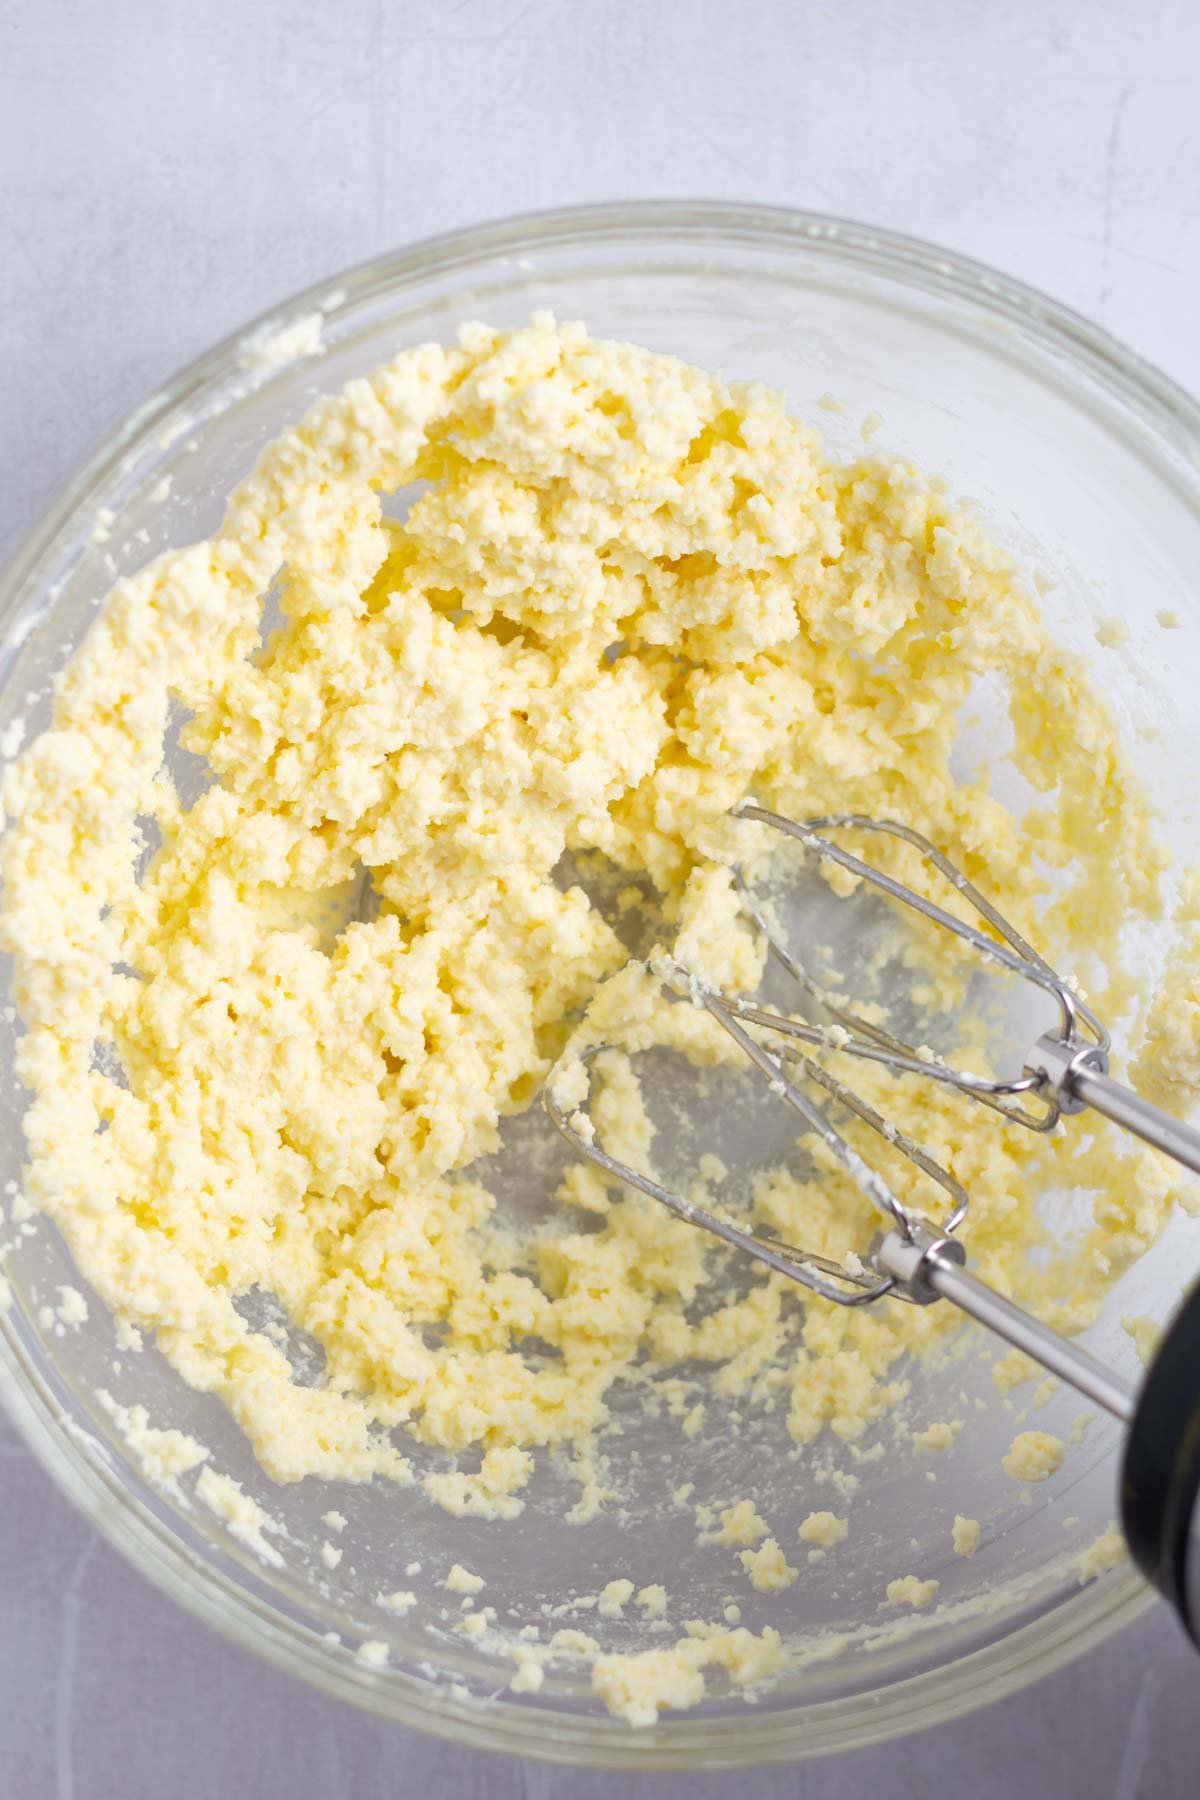 lemon mascarpone ingredients being whipped in a mixing bowl